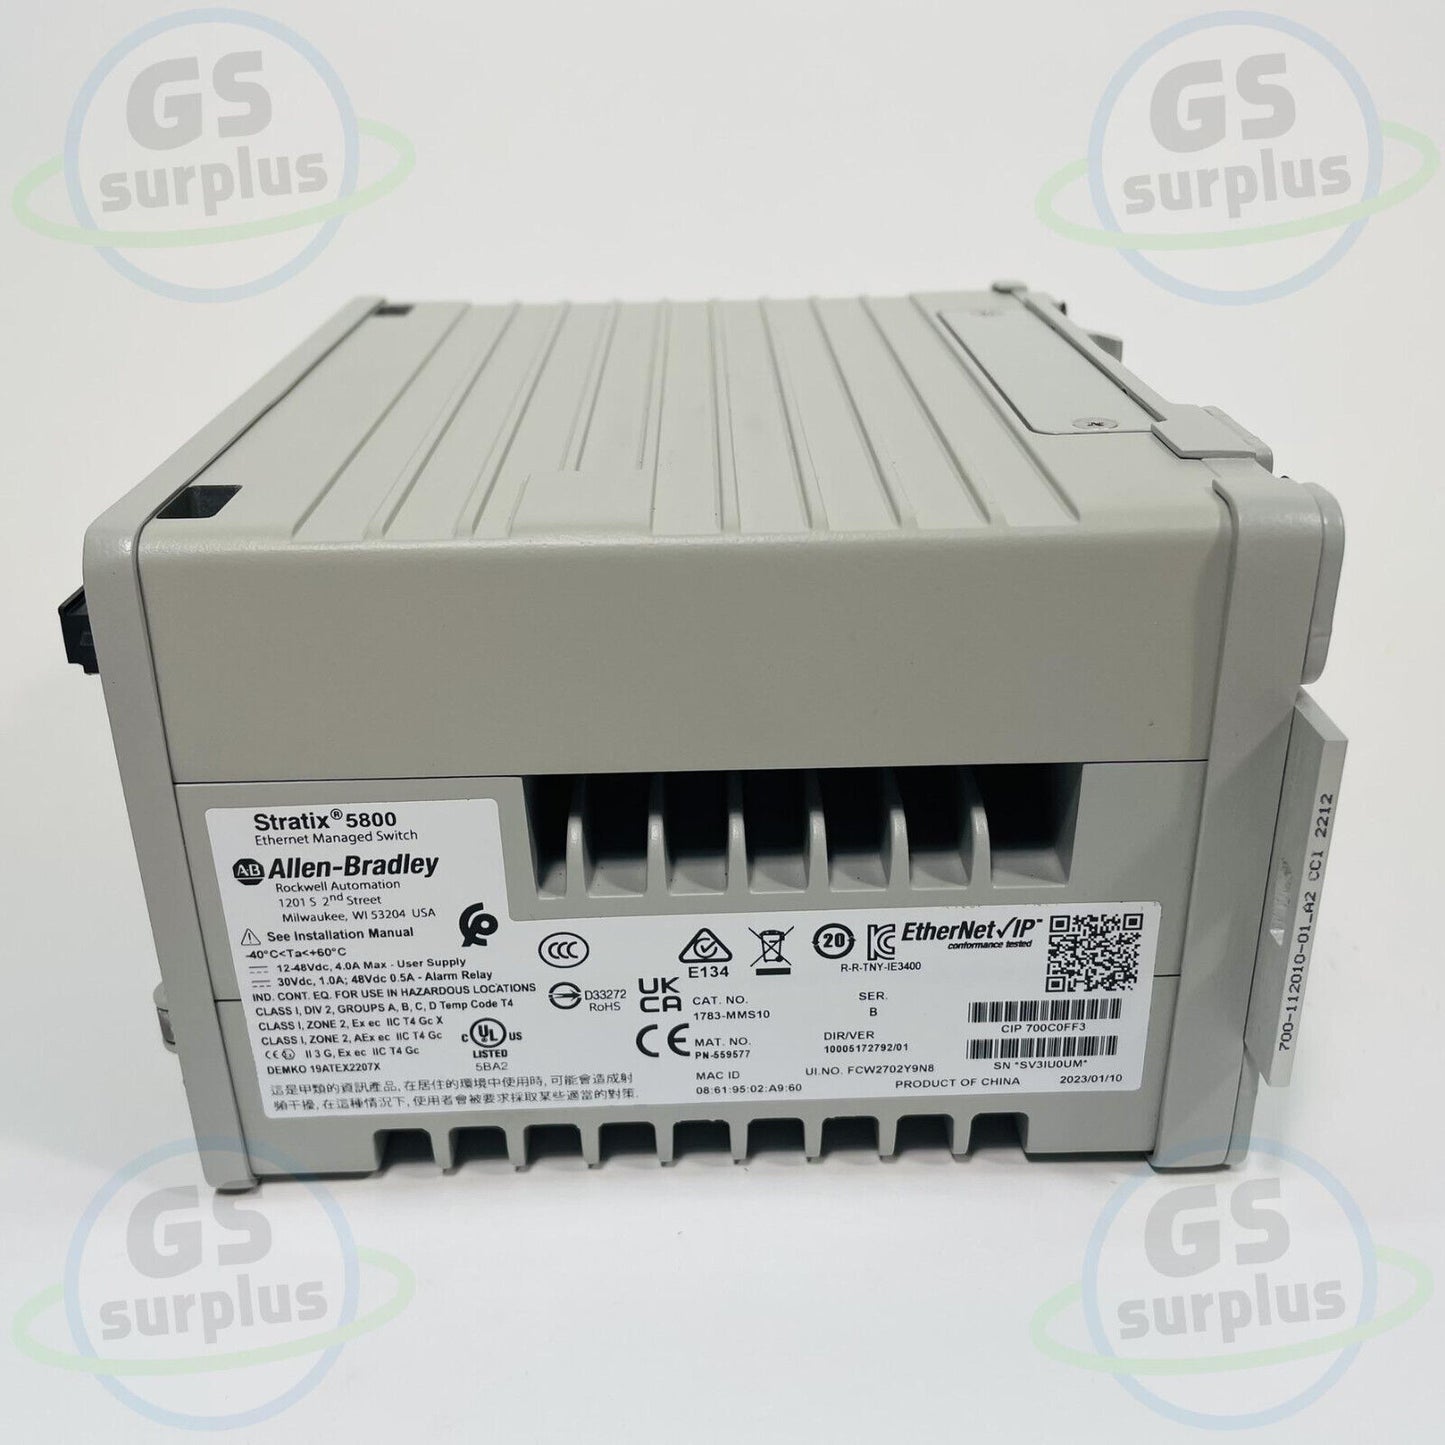 New Allen-Bradley 1783-MMS10 /B Stratix 5800 10 Port Ethernet Managed Switch